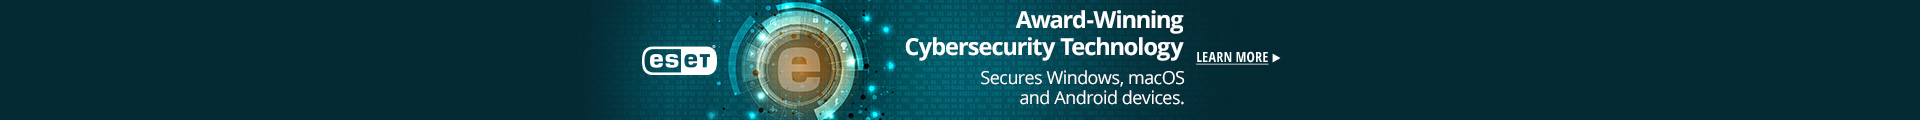 ESET Award-Winning Cybersecurity Technology